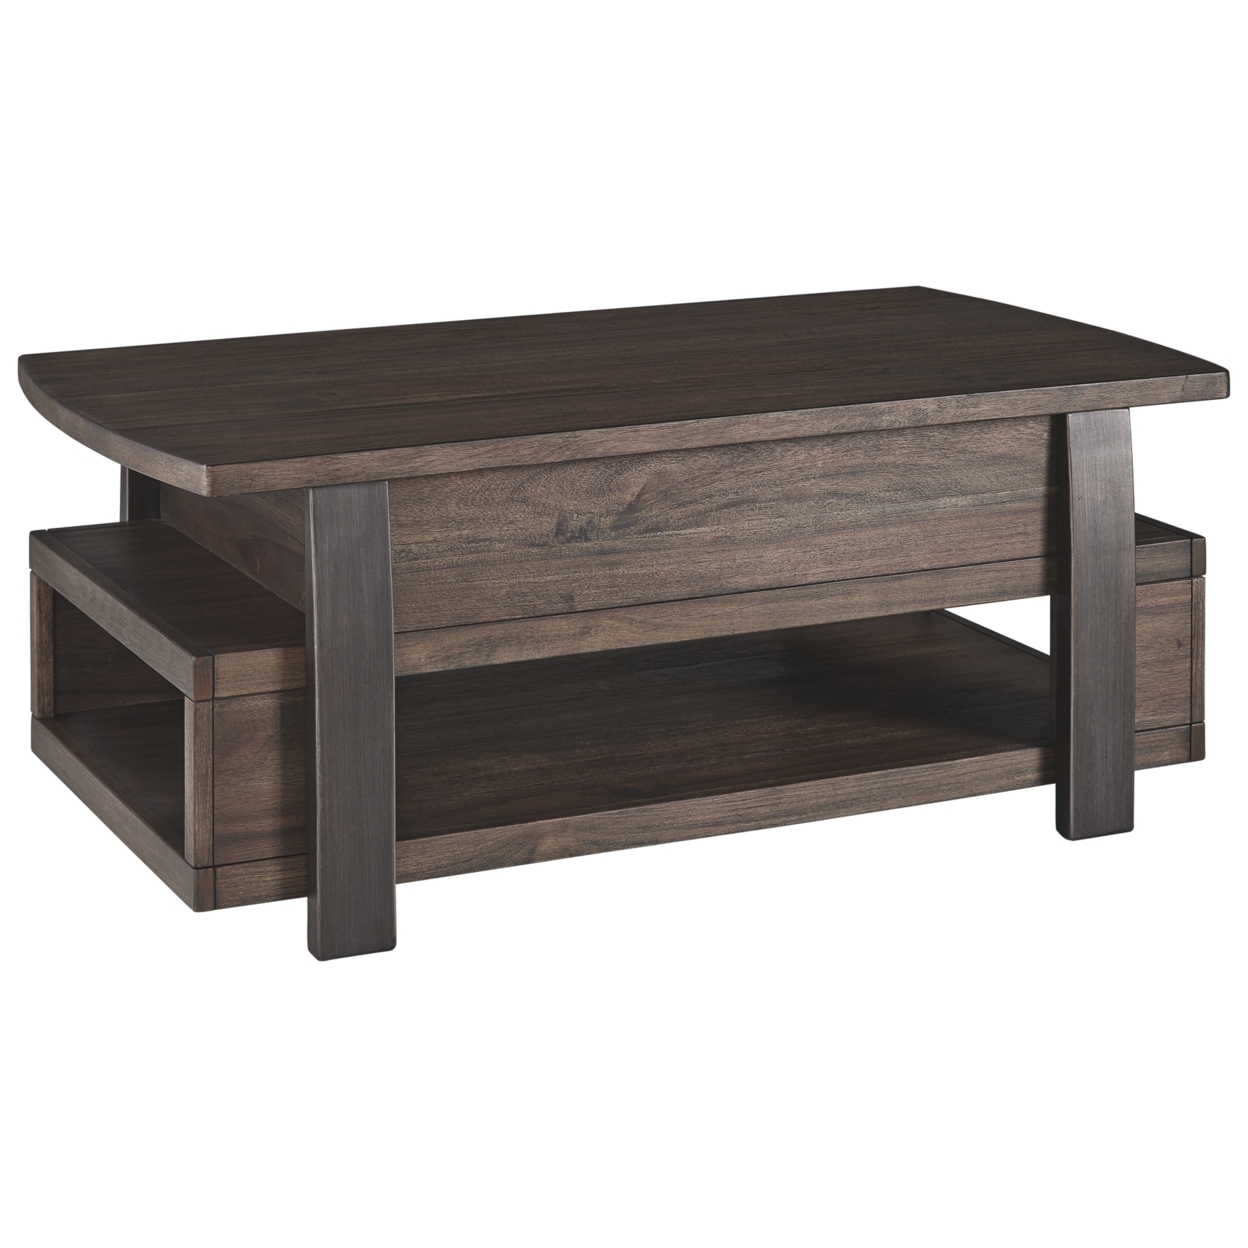 Wood And Metal Lift Top Coffee Table With Open Shelf, Brown- Saltoro Sherpi